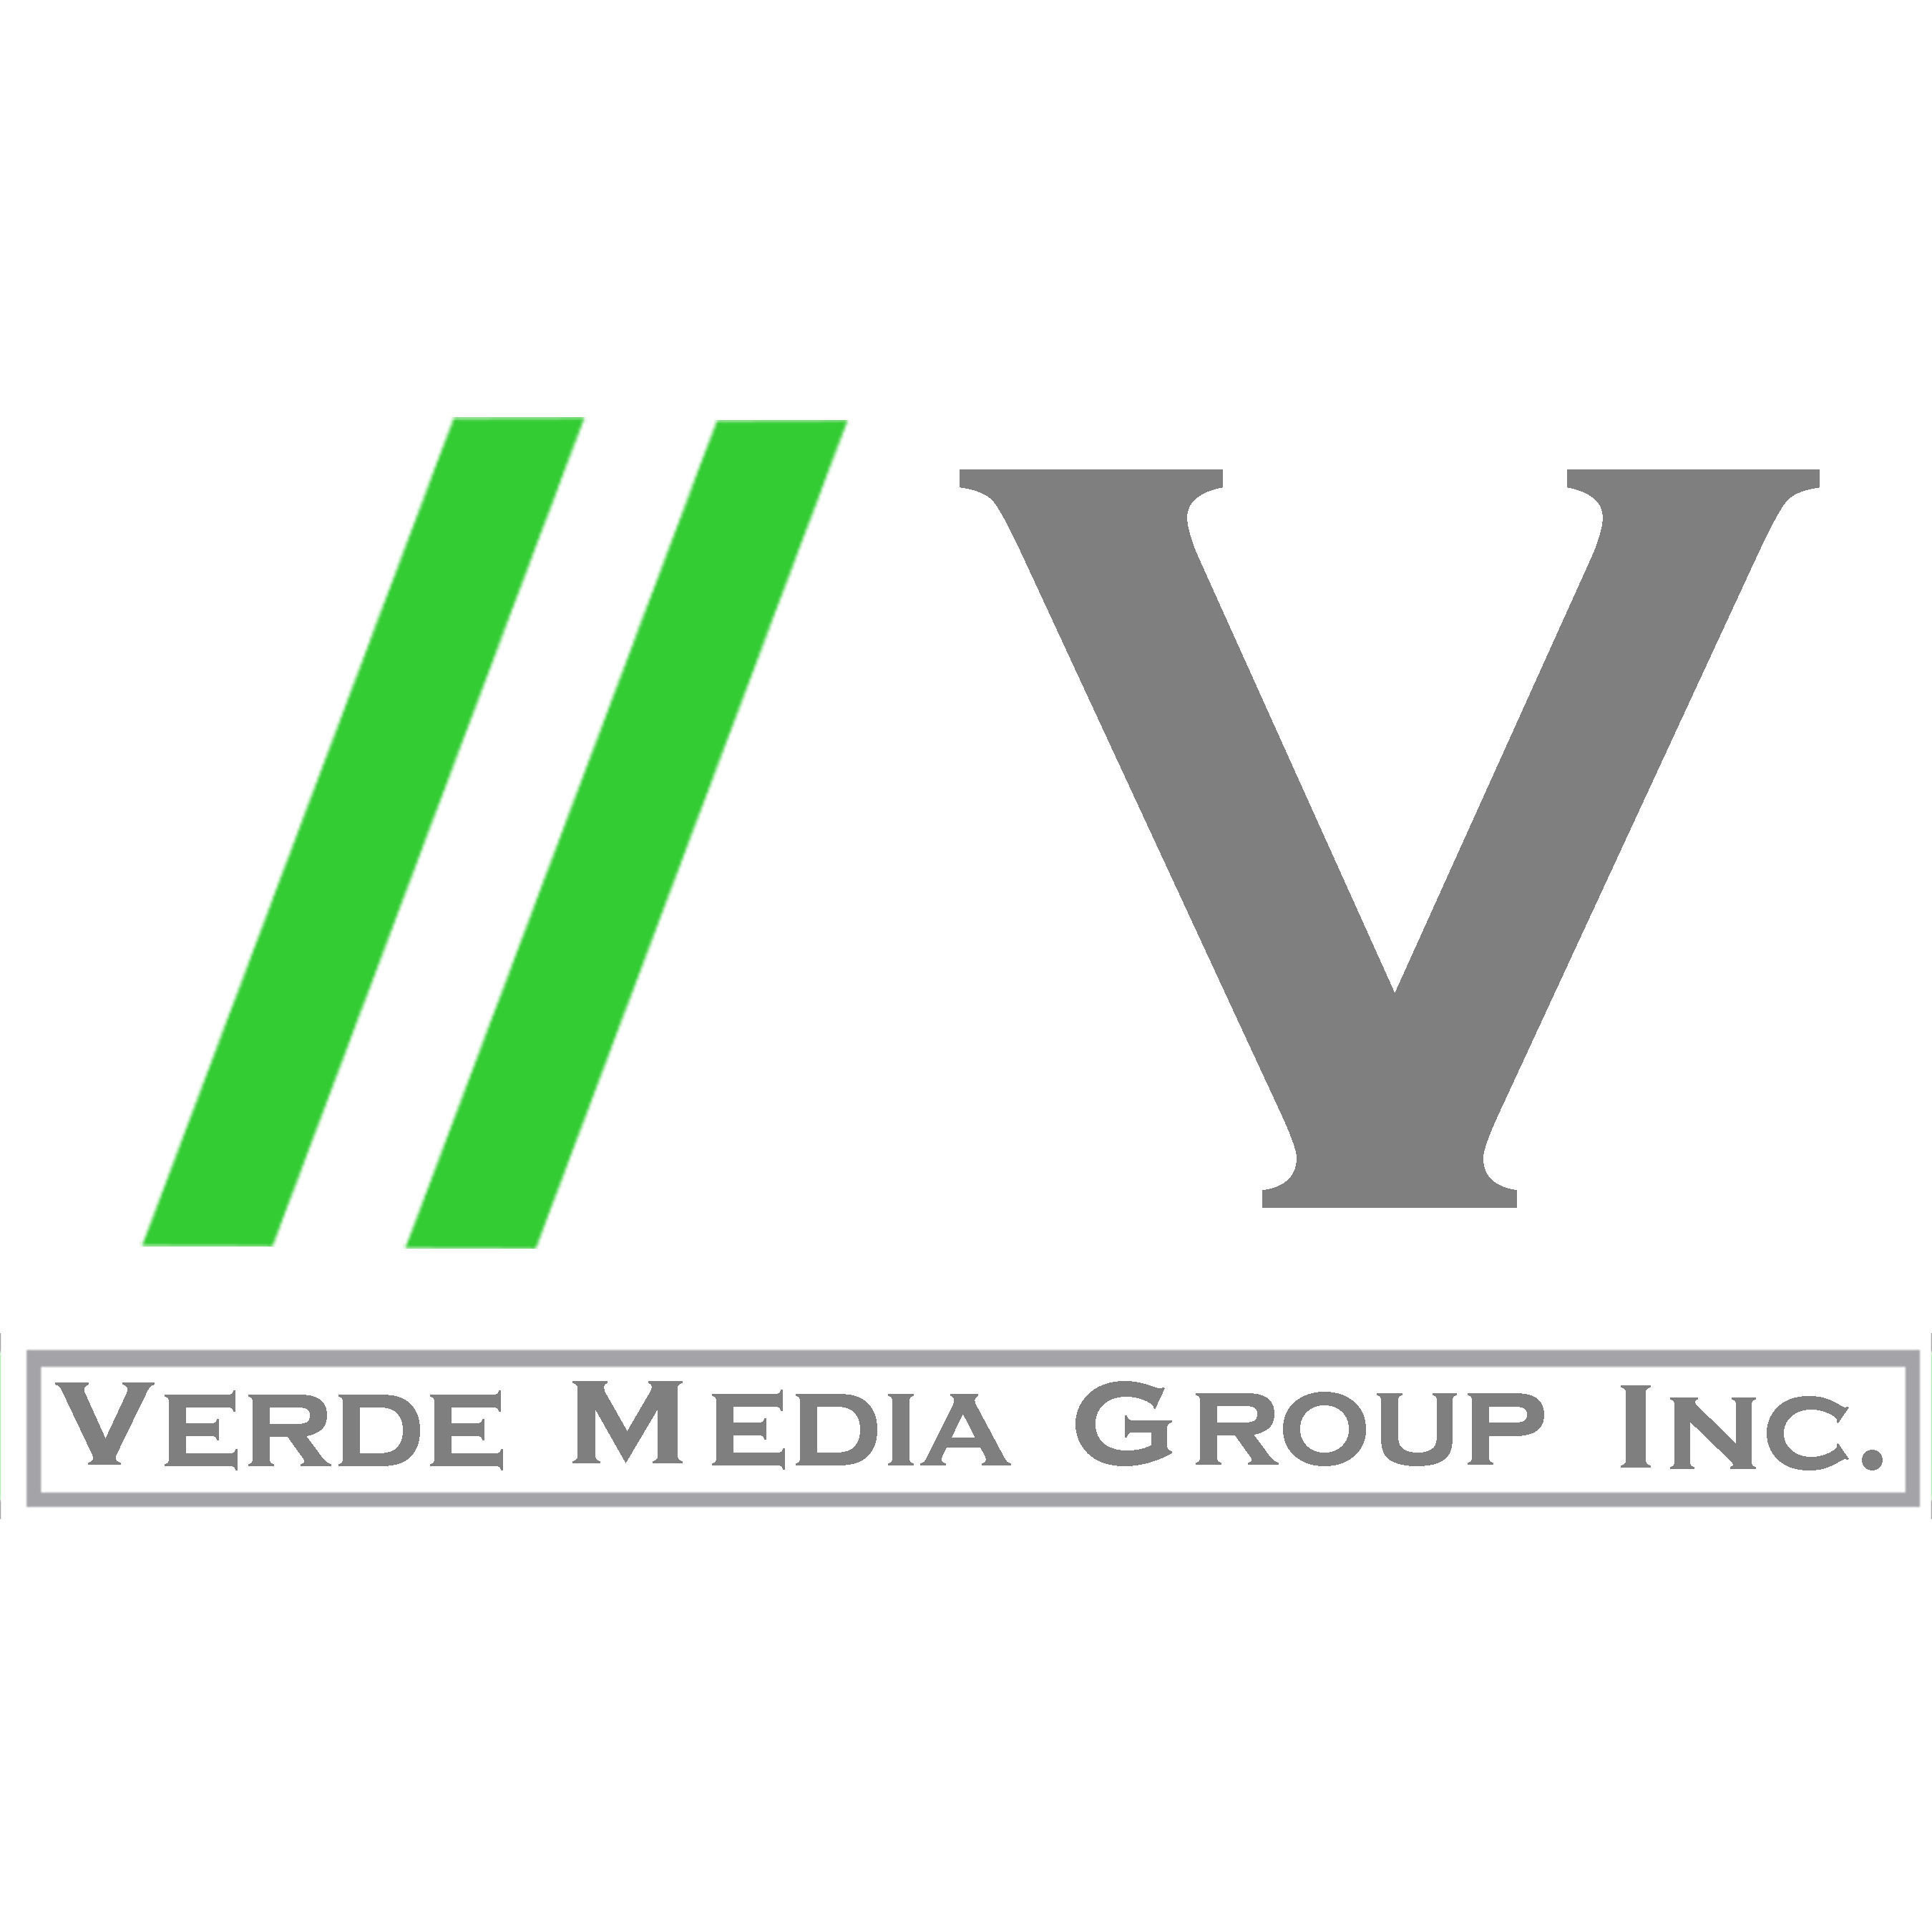 Verde Media Group, Inc. logo. (PRNewsFoto/Verde Media Group, Inc.) (PRNewsFoto/VERDE MEDIA GROUP, INC.)